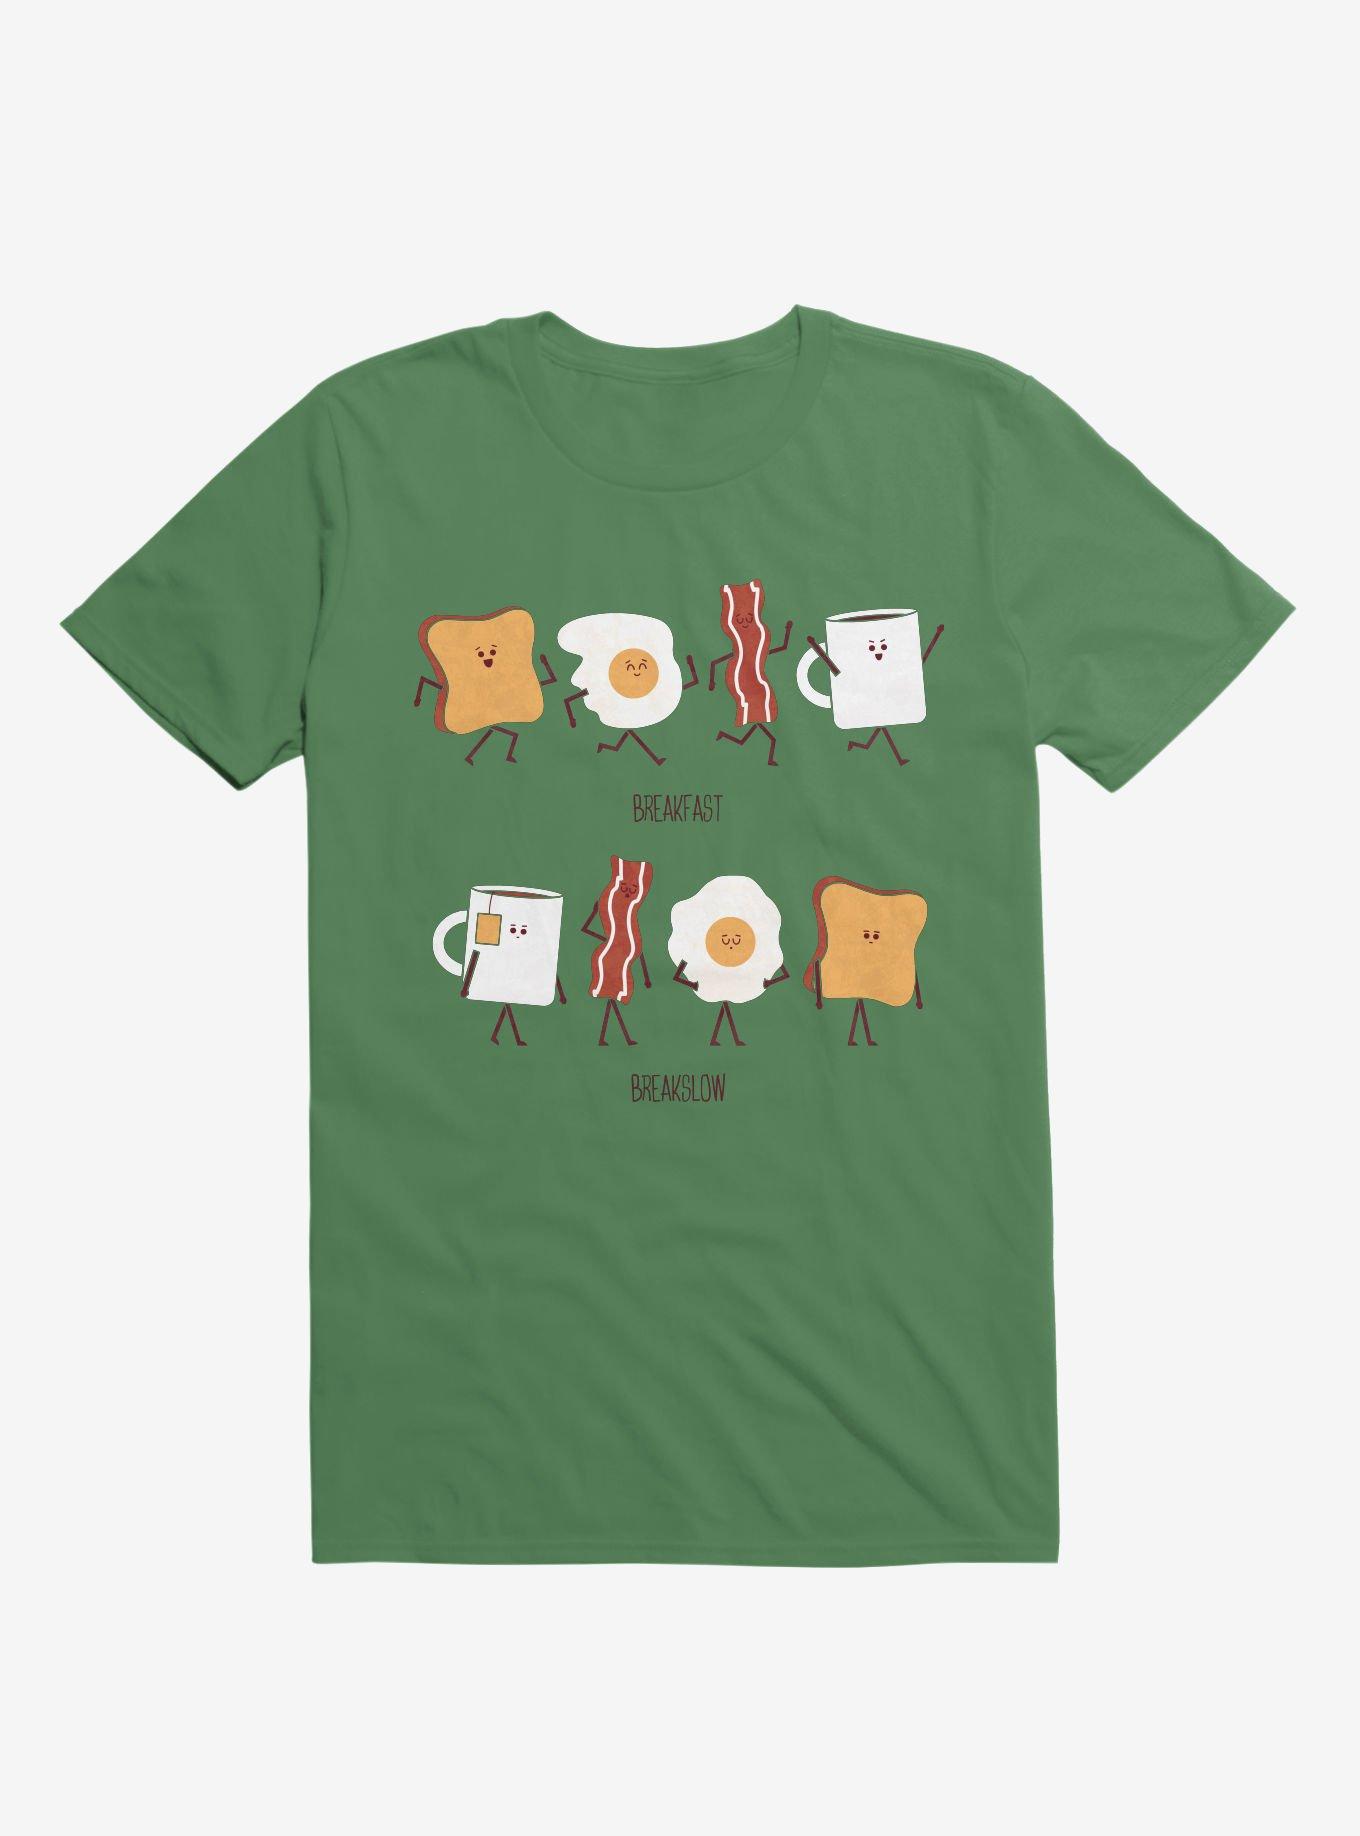 Opposites Breakfast Breakslow Irish Green T-Shirt - GREEN | Hot Topic